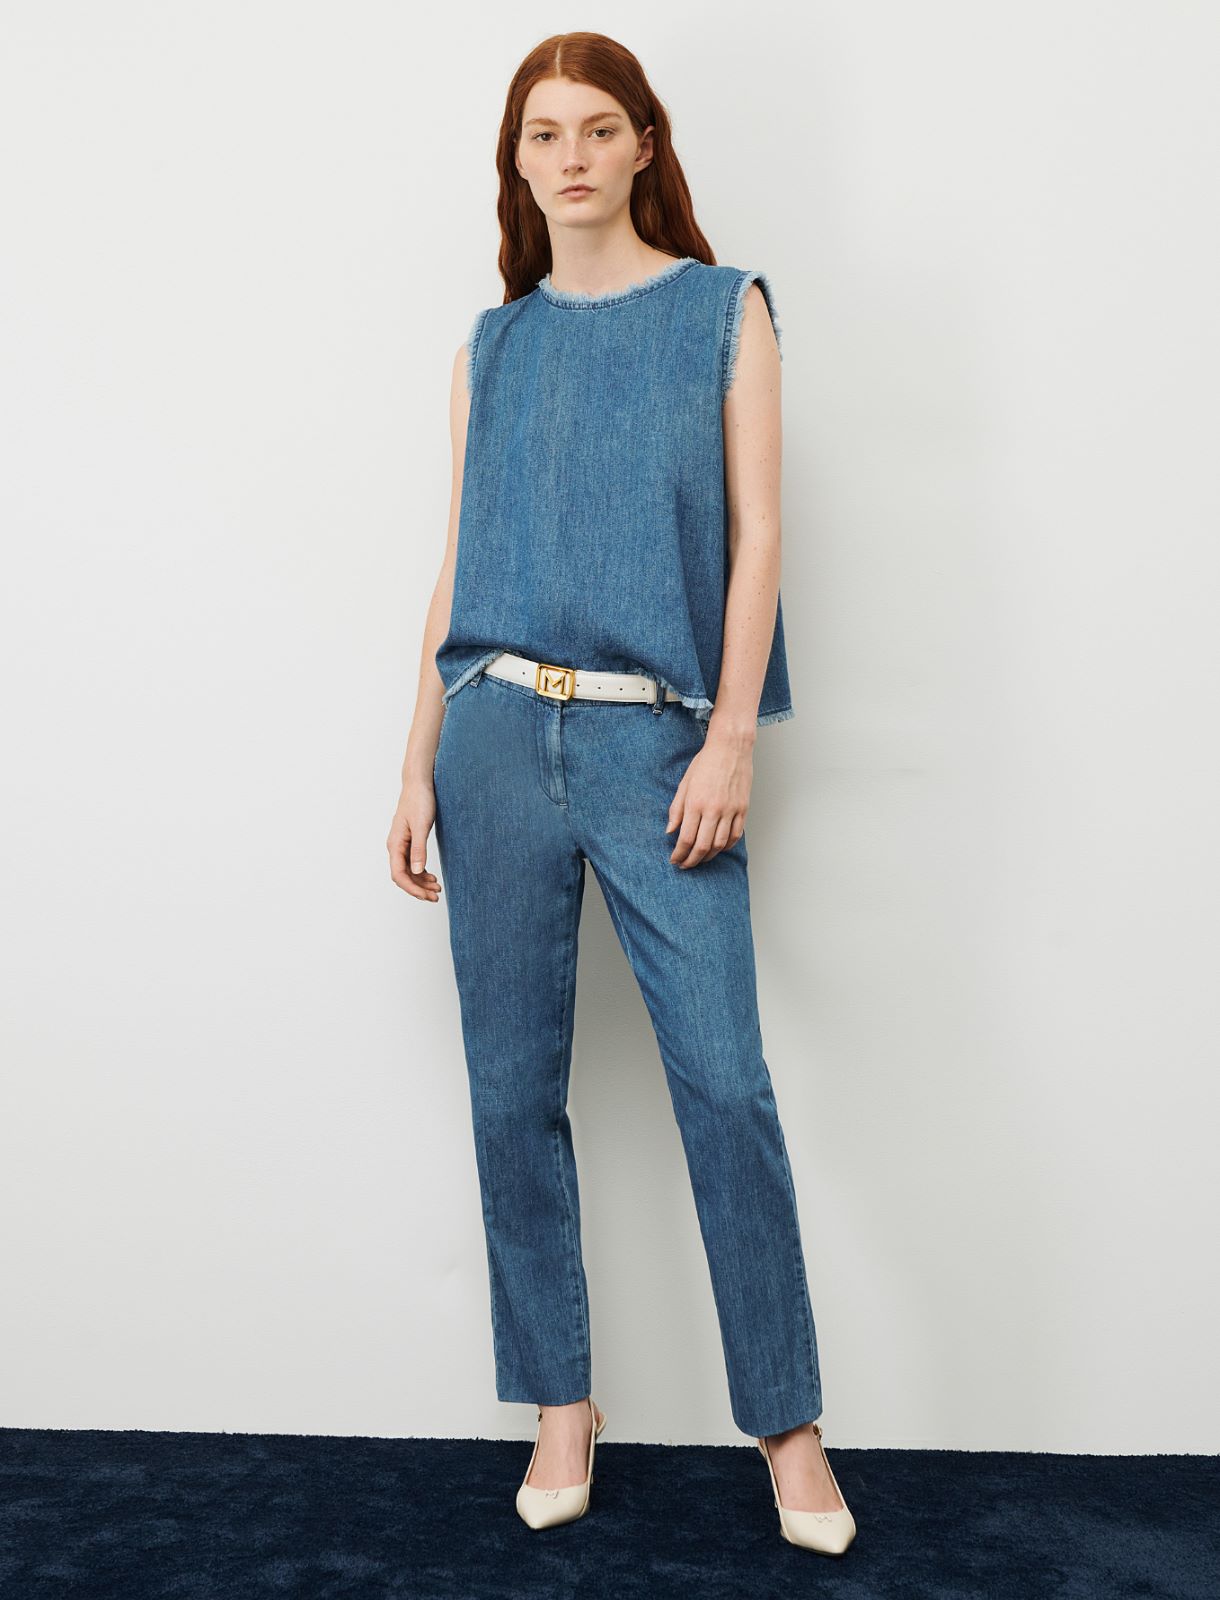 Denim top - Blue jeans - Marina Rinaldi